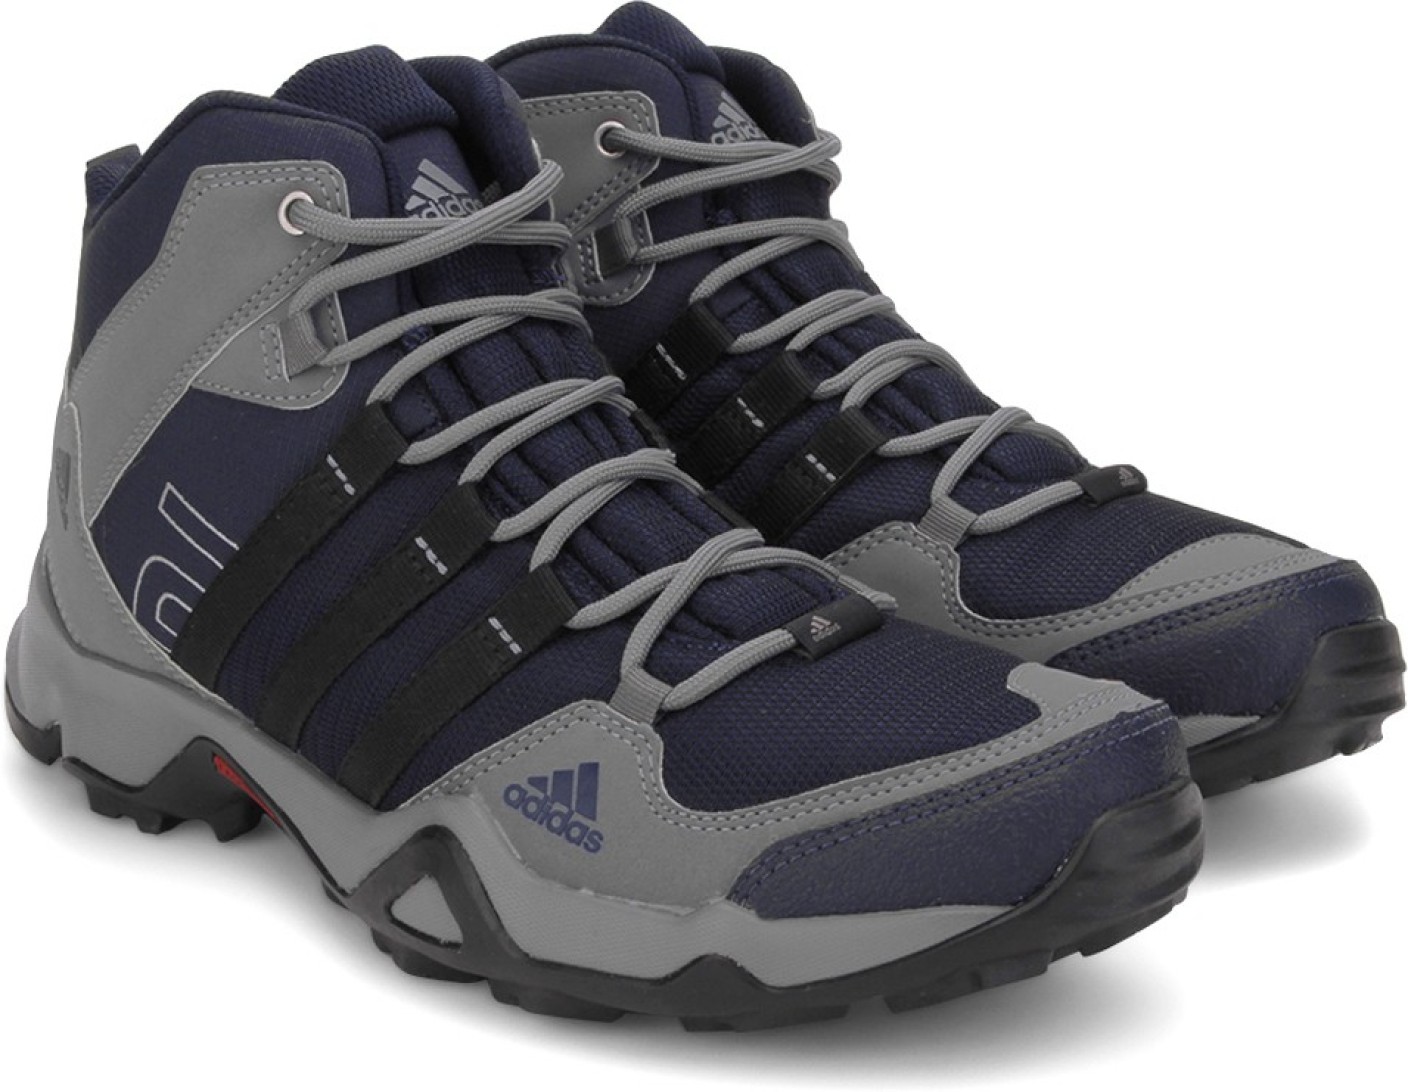 ADIDAS AX2 MID Outdoor Shoes For Men - Buy Nt.Navy/Visgray Color ADIDAS ...